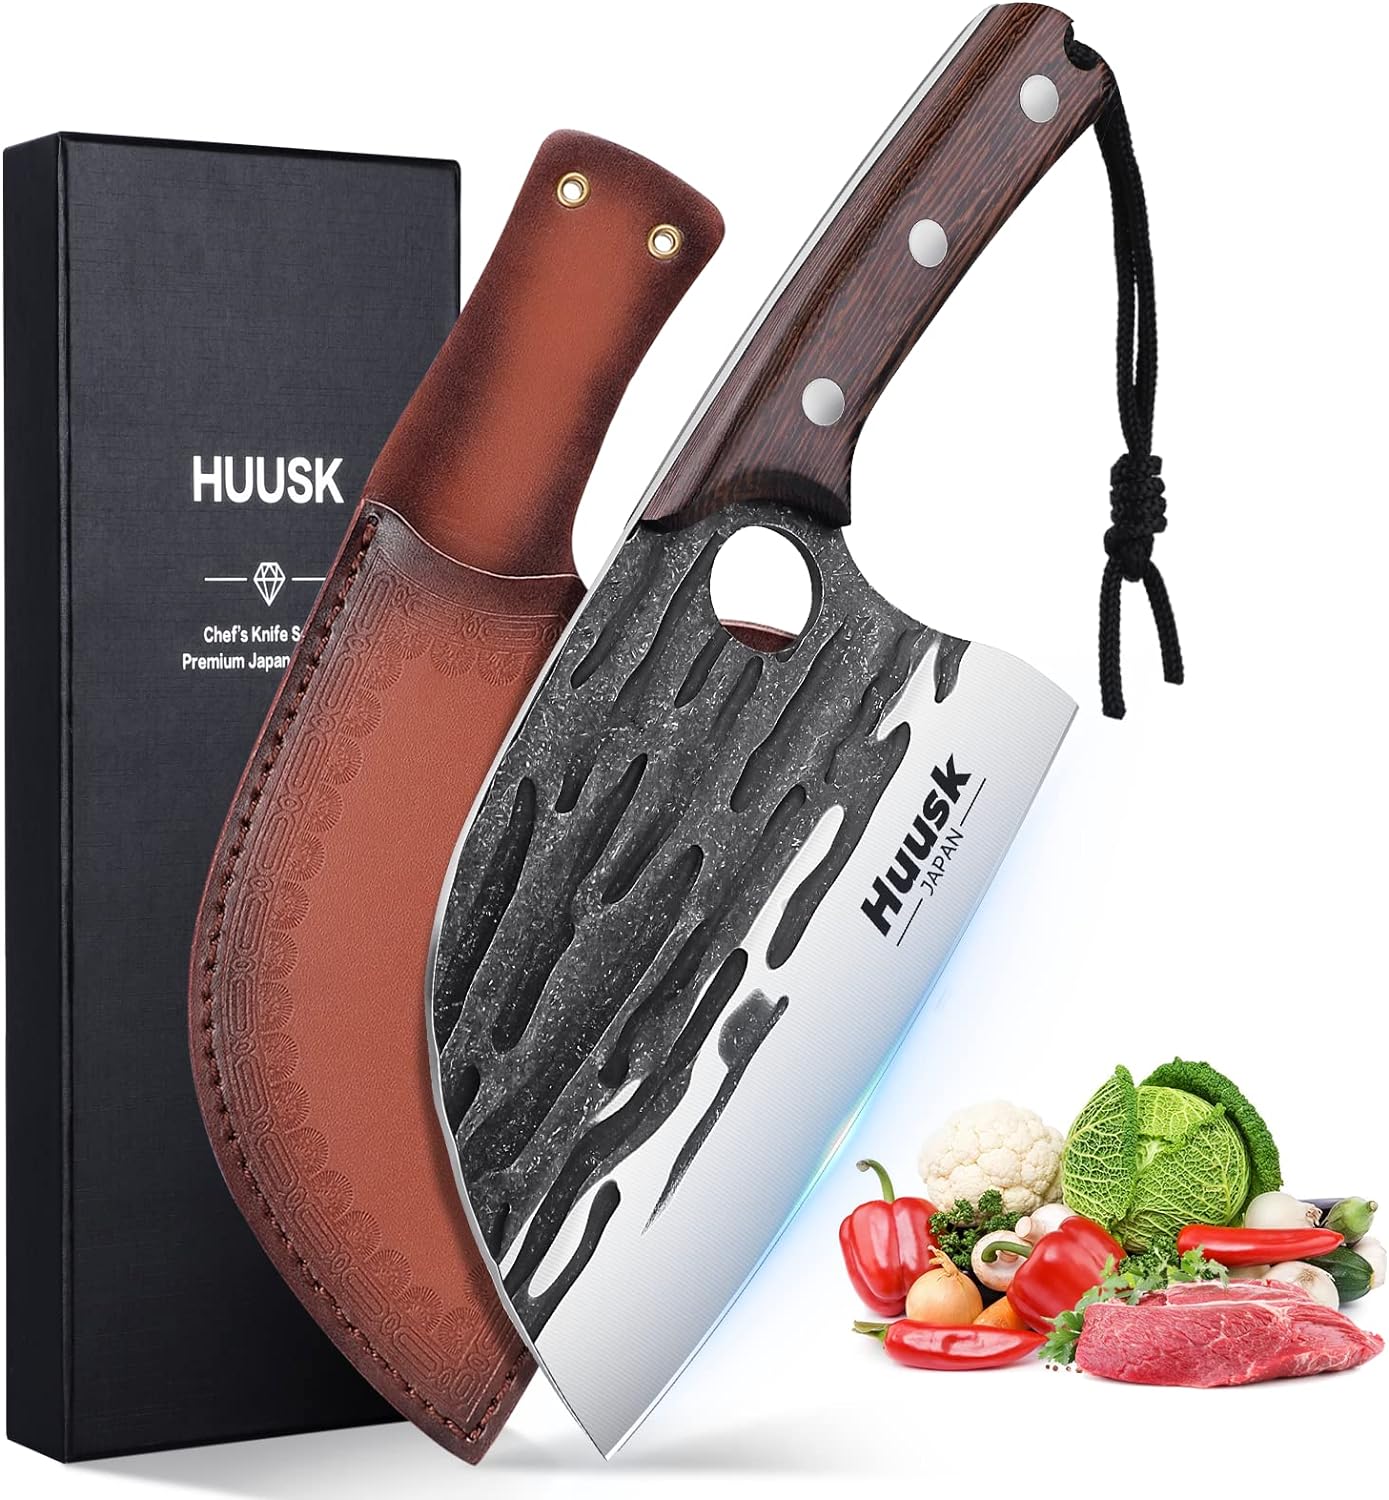 Huusk Japan Knives, Upgraded Serbian Chef Knife Japanese Meat Cleaver Knife